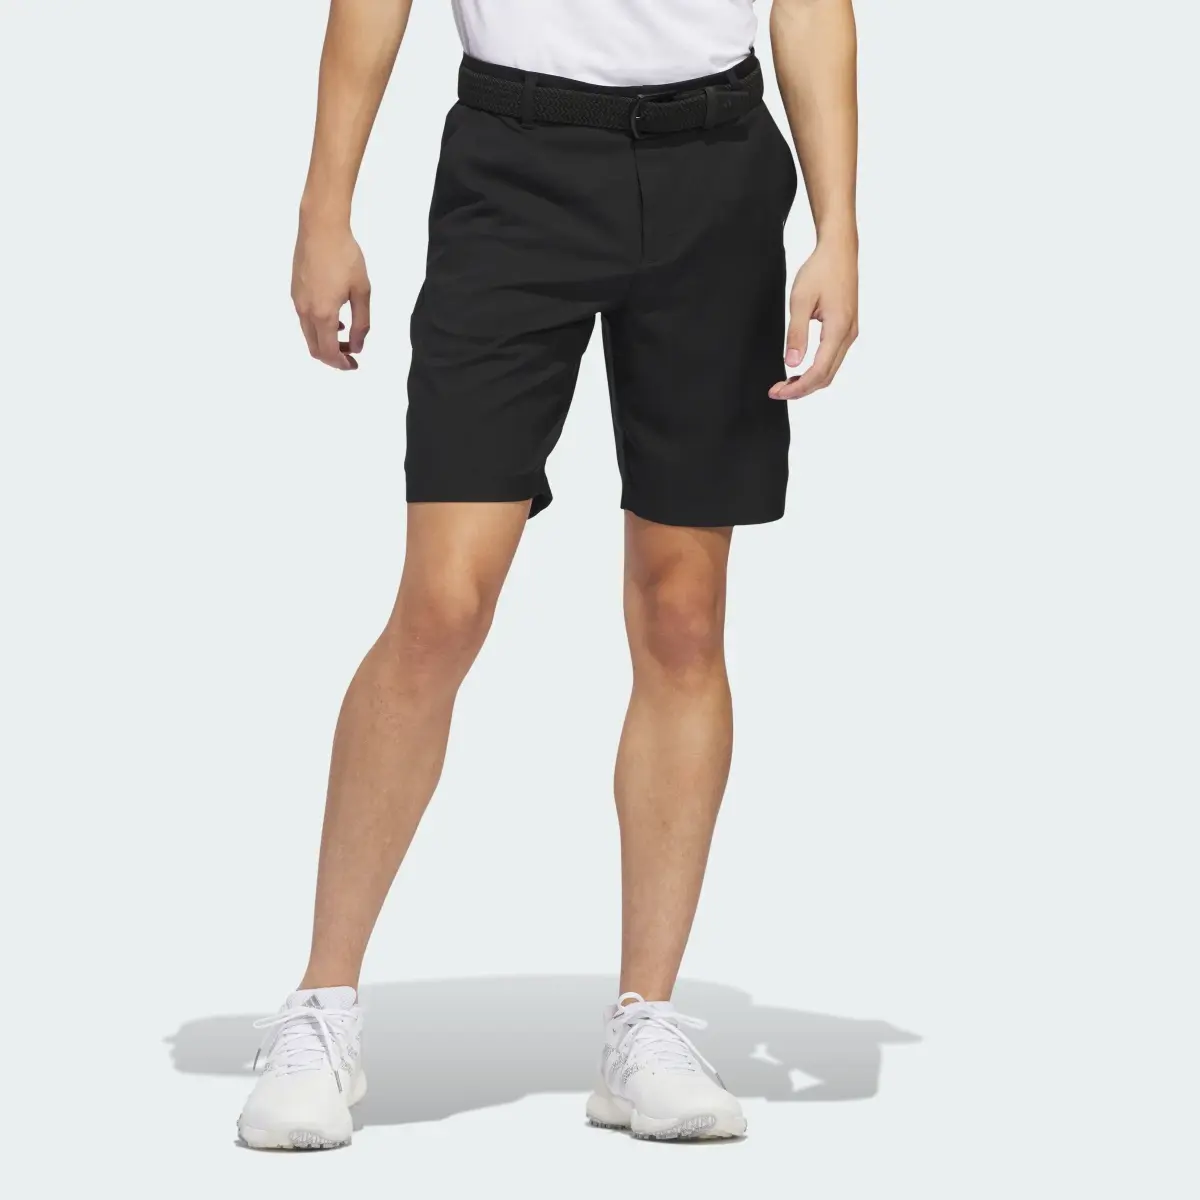 Adidas Adi Advantage Golf Shorts. 1